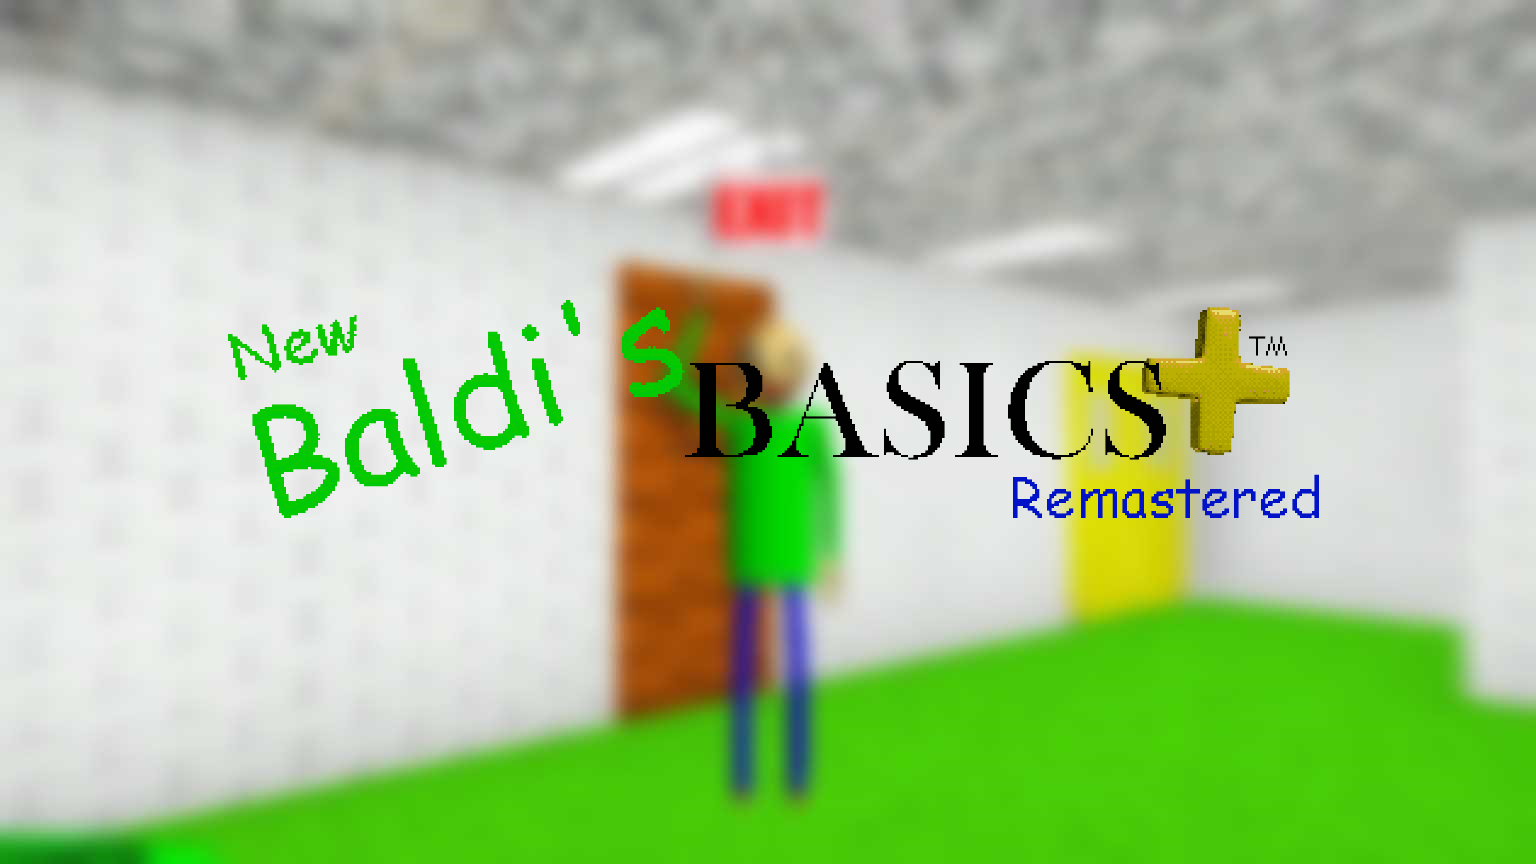 Baldi Plus Remastered. Карта Baldi's Basics Classic Remastered. Baldi Basics Plus 0.4.1. Baldi's Basics Plus. Baldis basics remastered читы